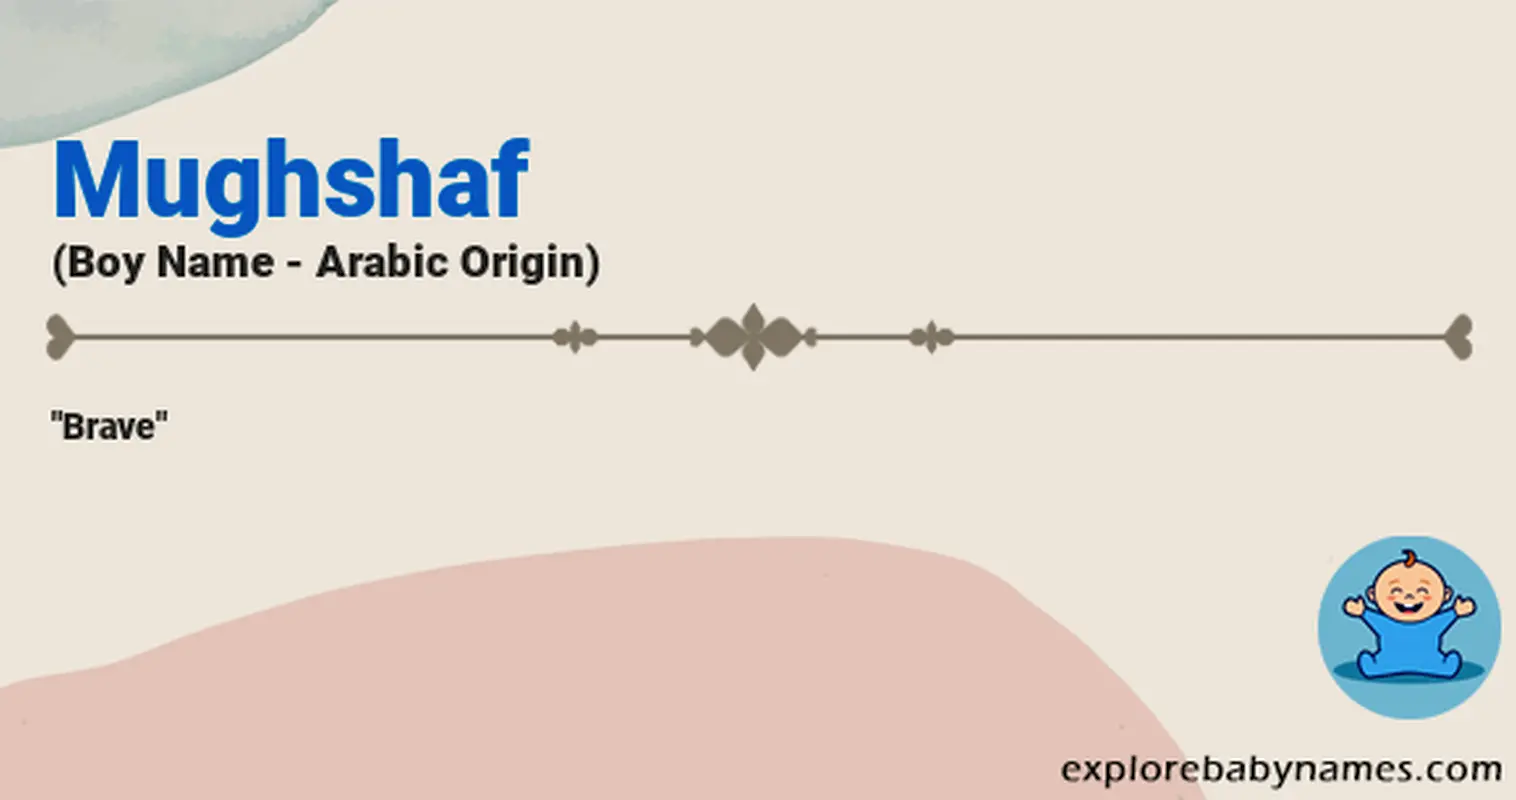 Meaning of Mughshaf